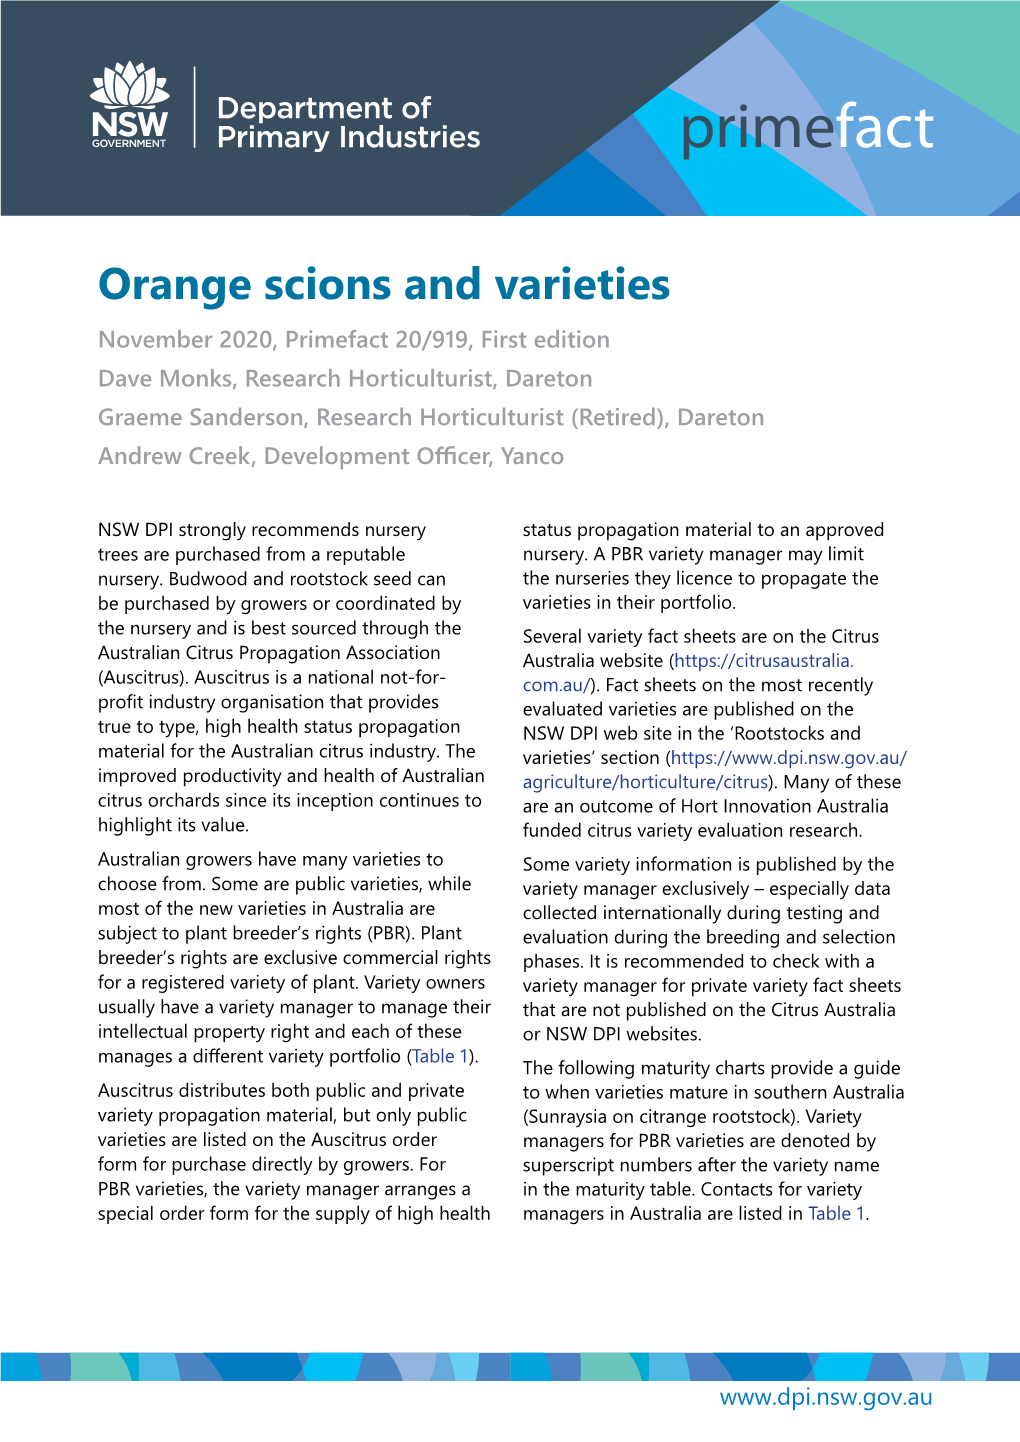 Orange Scions and Varieties